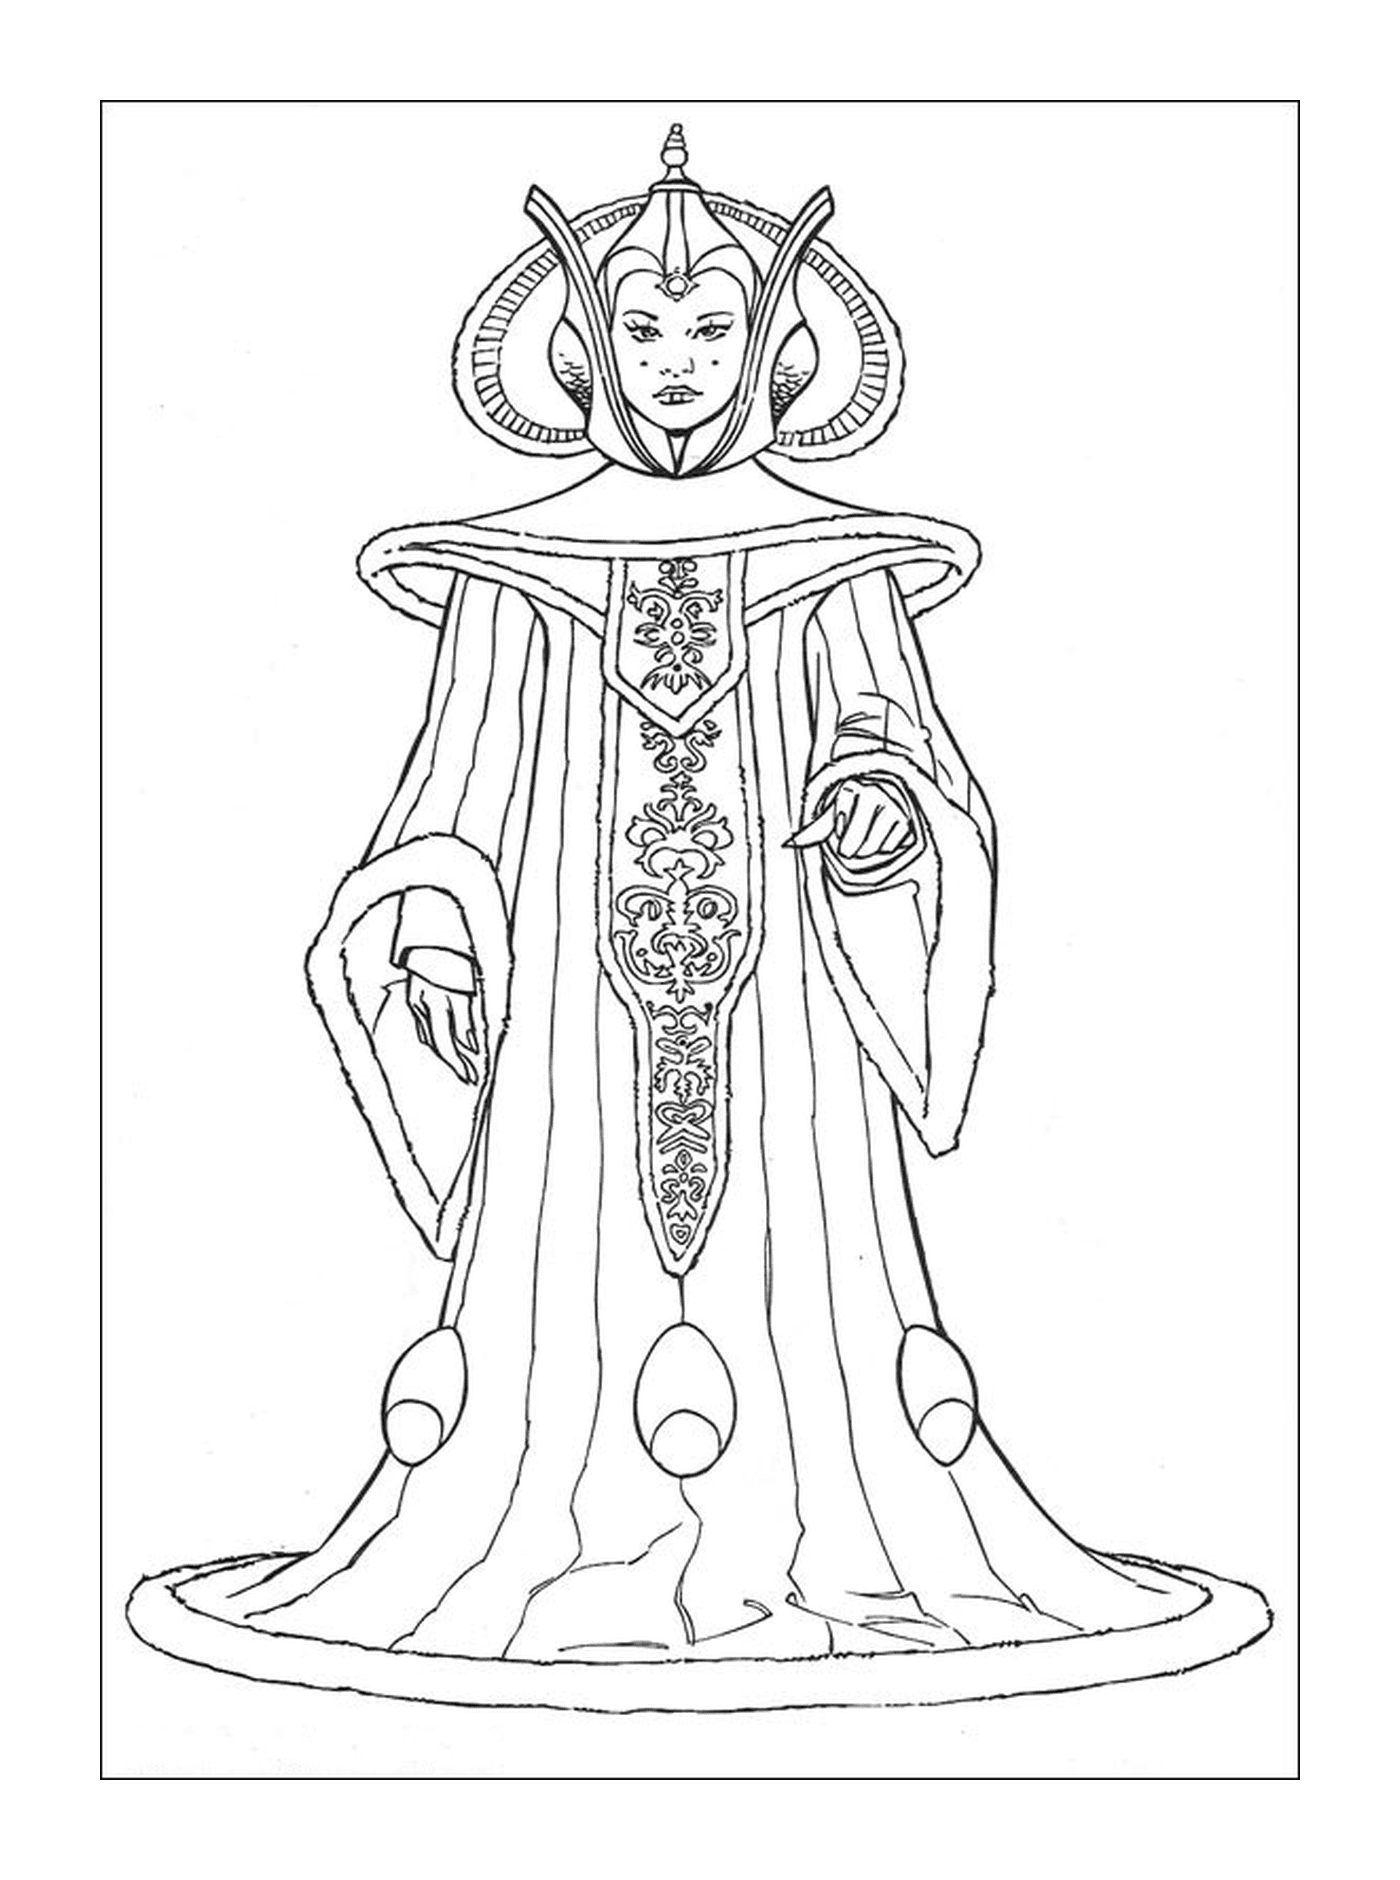  Königin Amidala von Naboo 